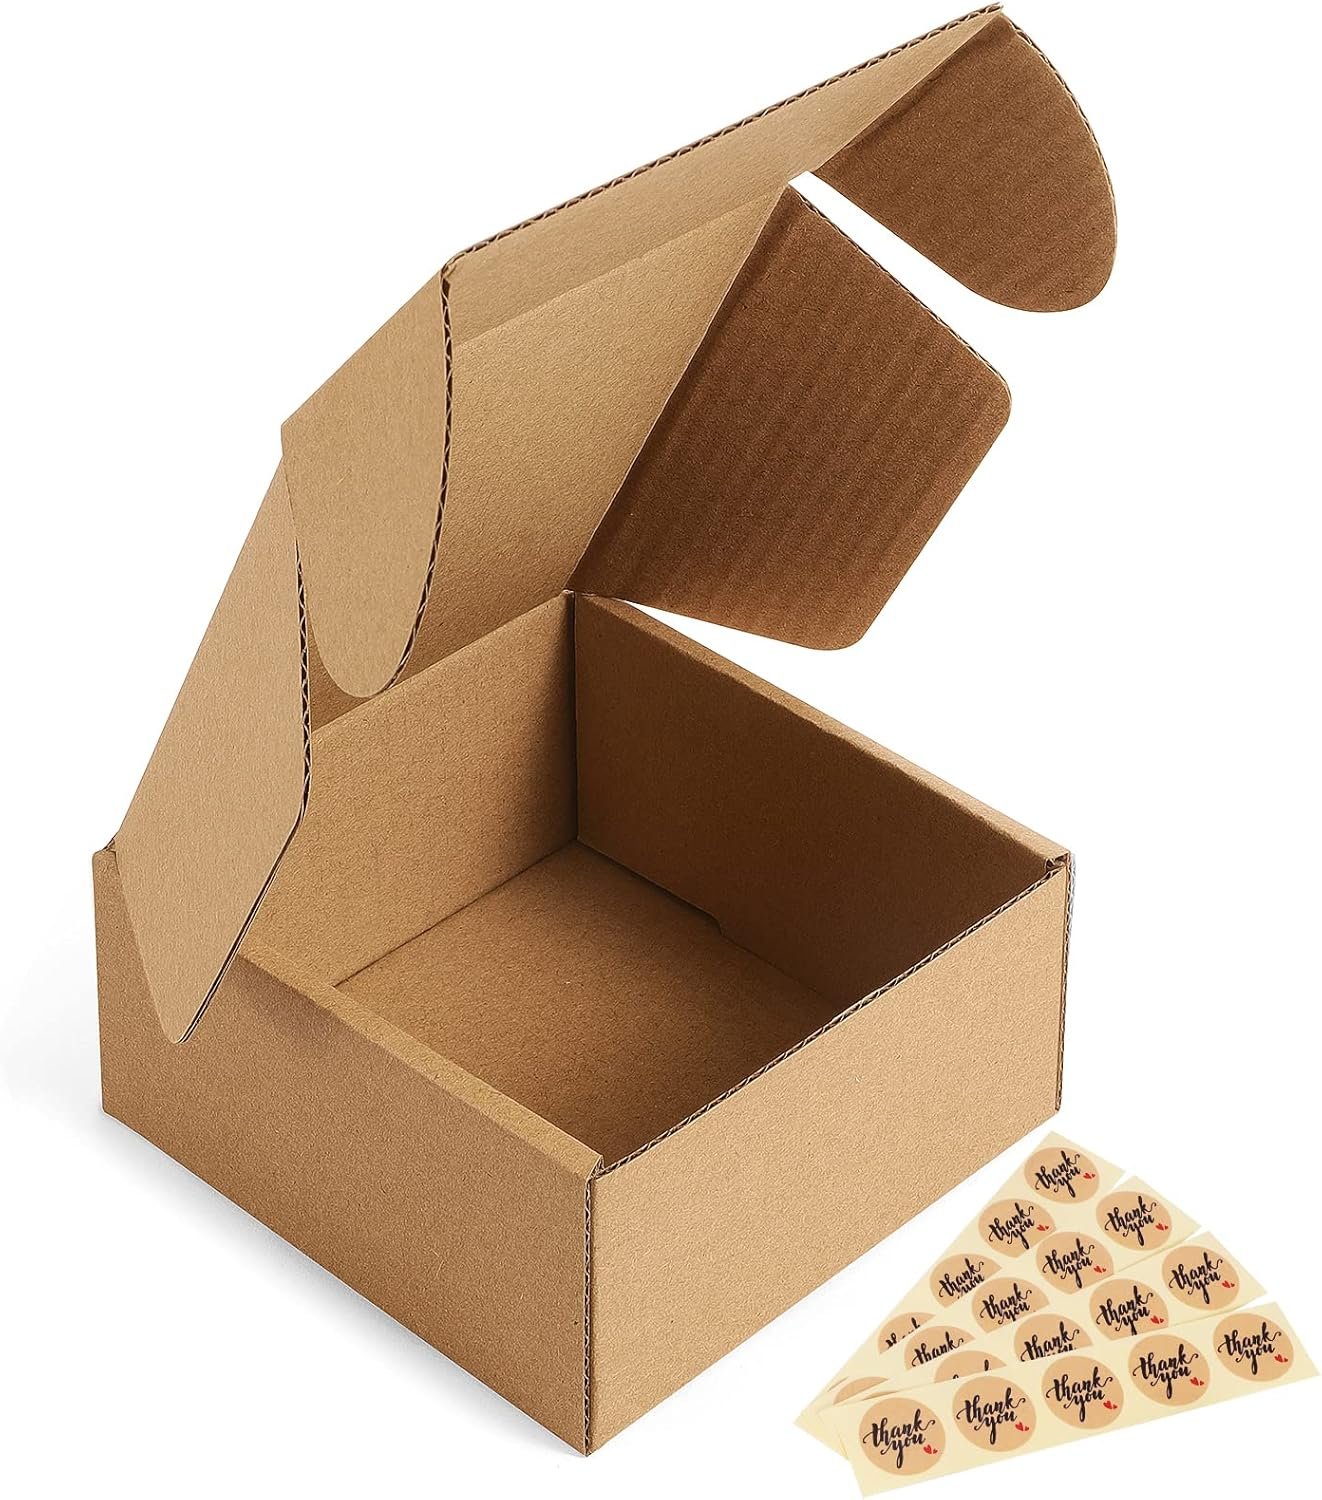 Eupako Small Shipping Boxes Review